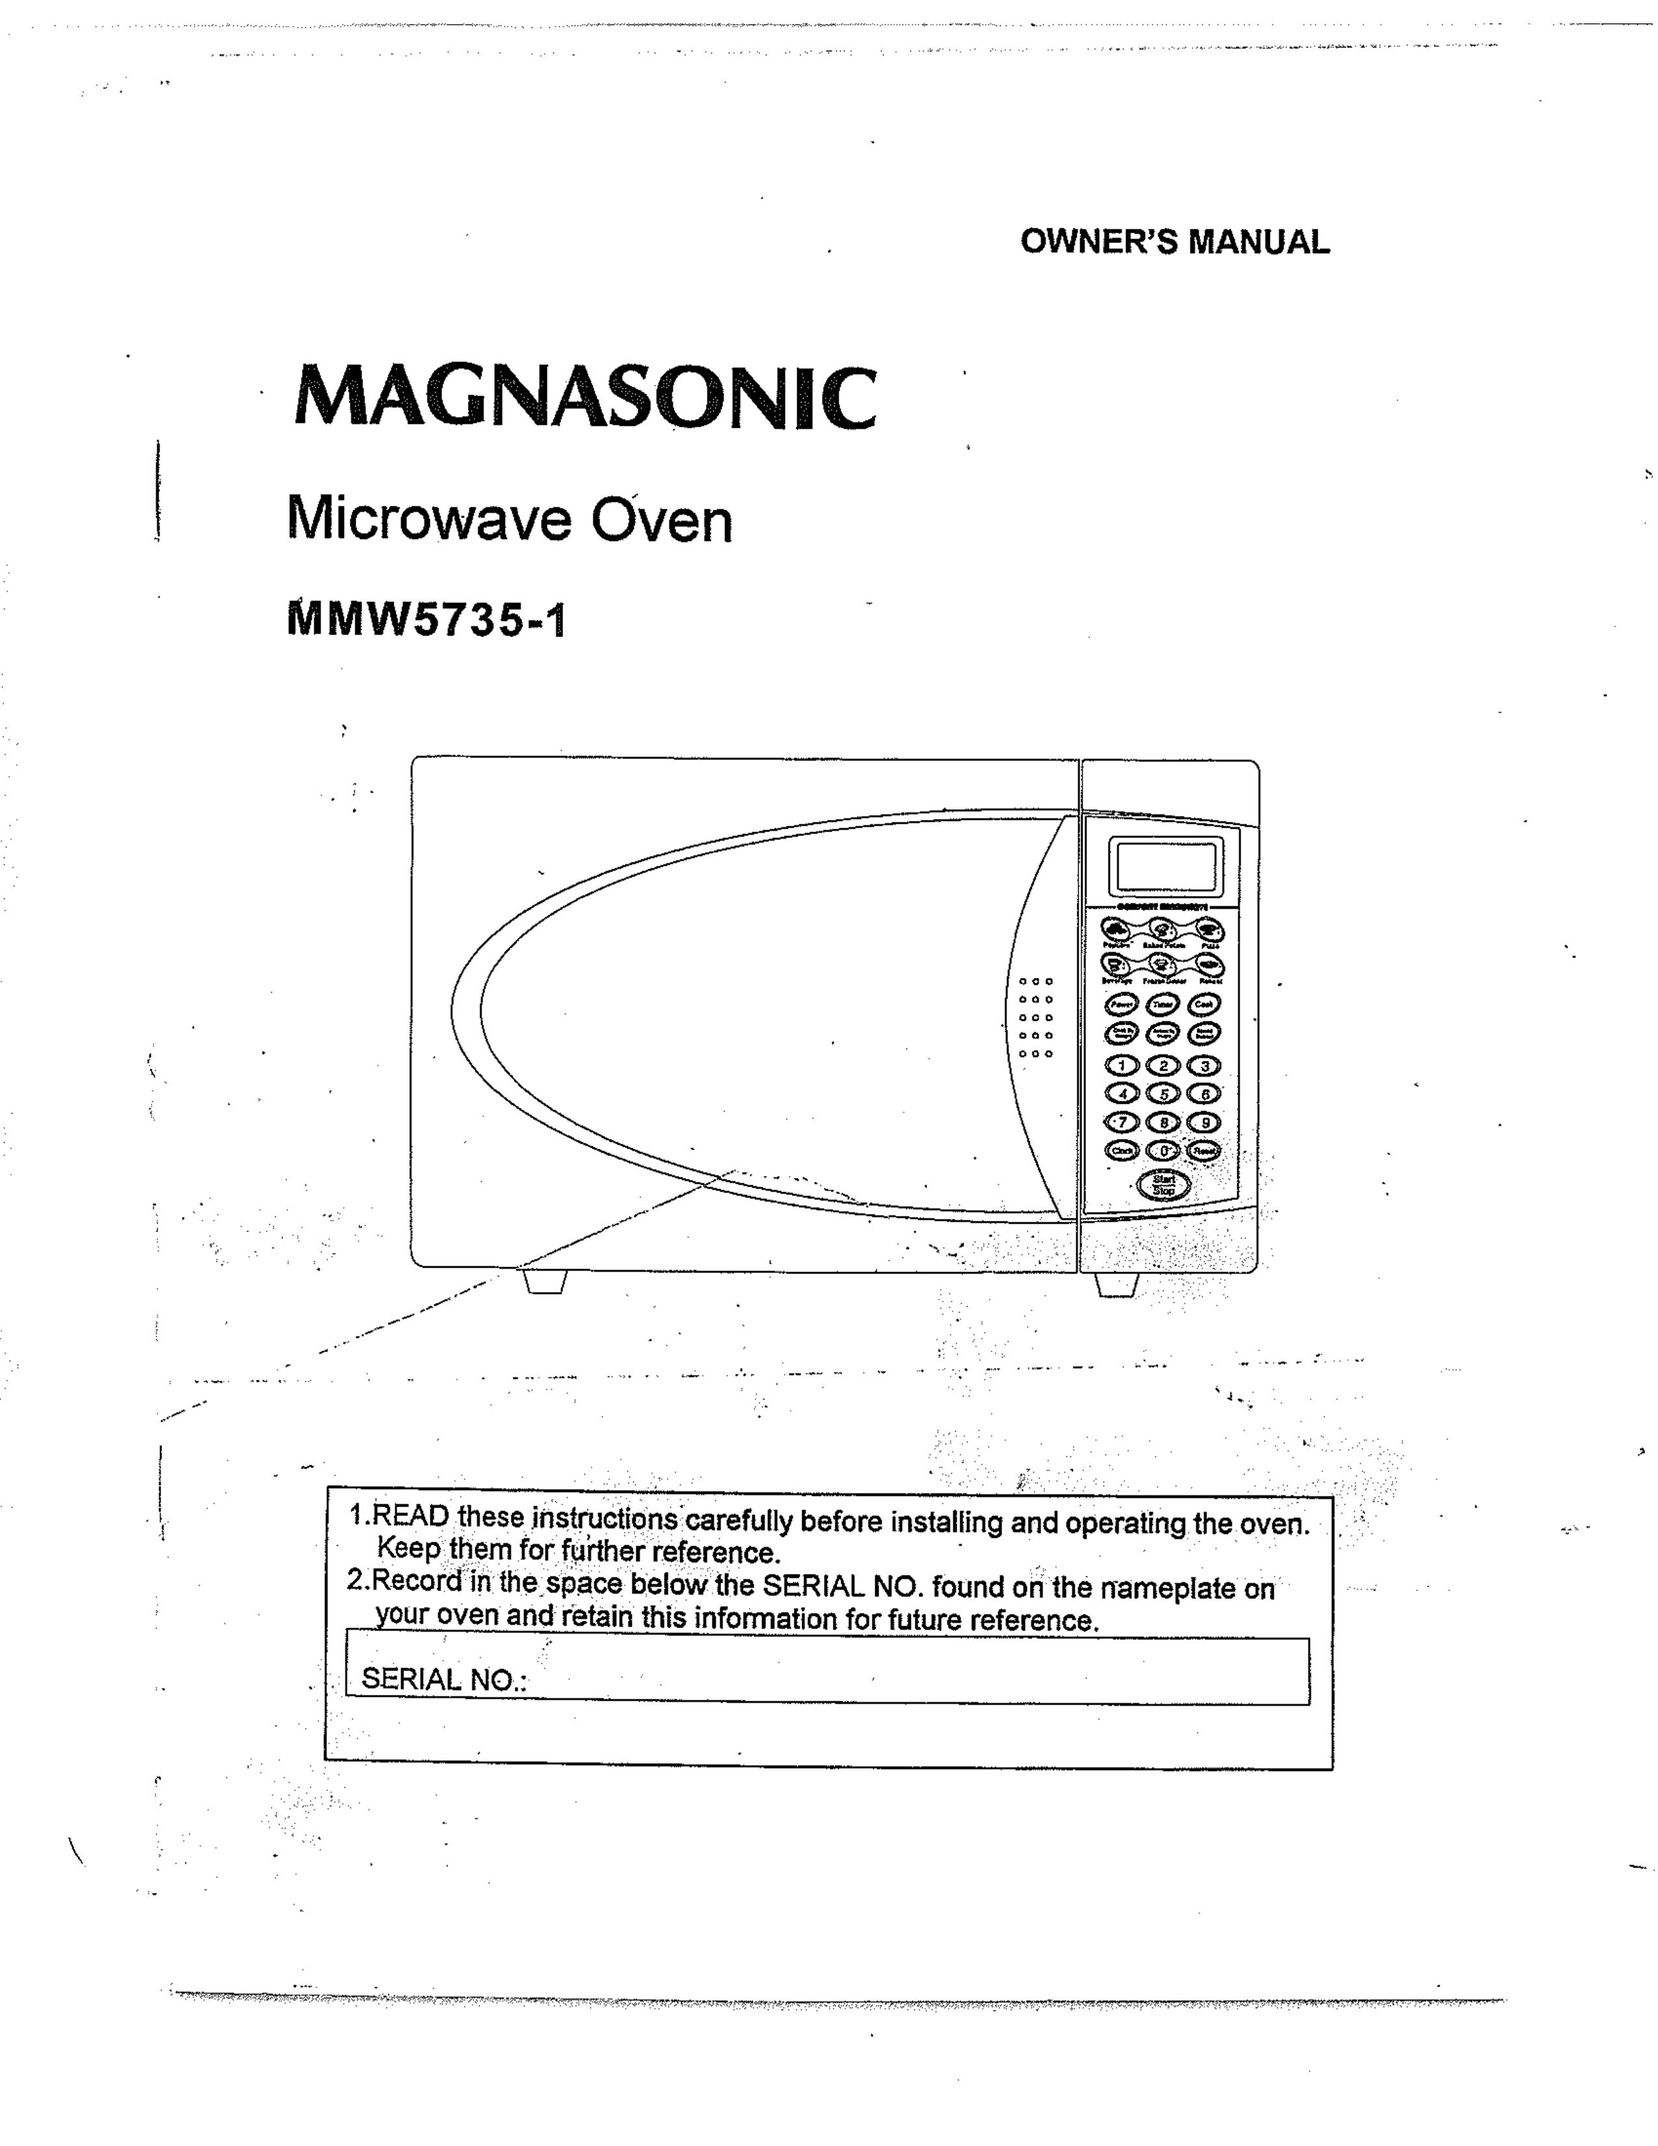 Magnasonic MMW5735-1 Microwave Oven User Manual